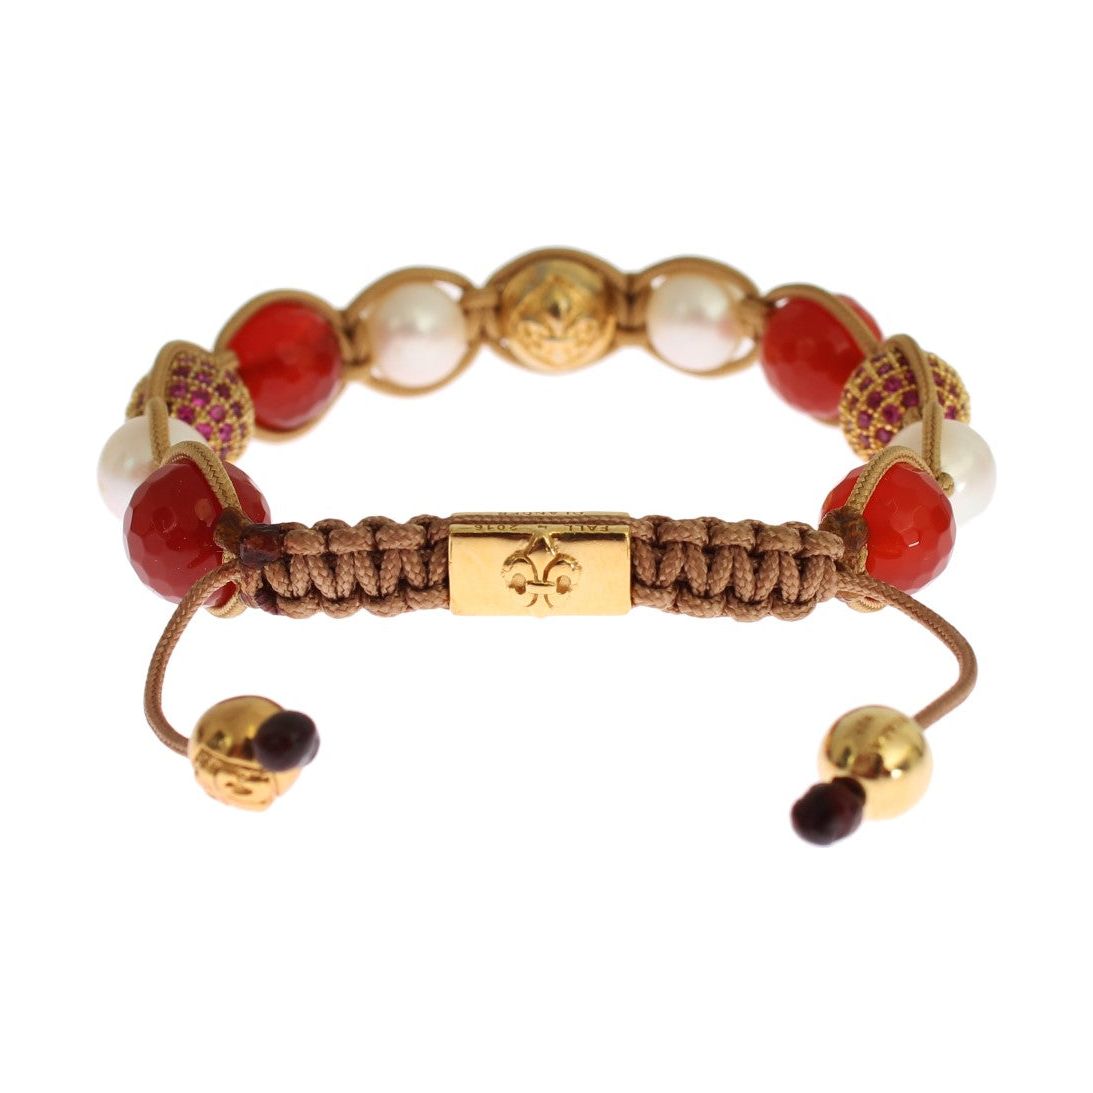 Nialaya Exquisite Handcrafted Gemstone Bracelet Bracelet cz-carnelian-pearl-925-silver-bracelet